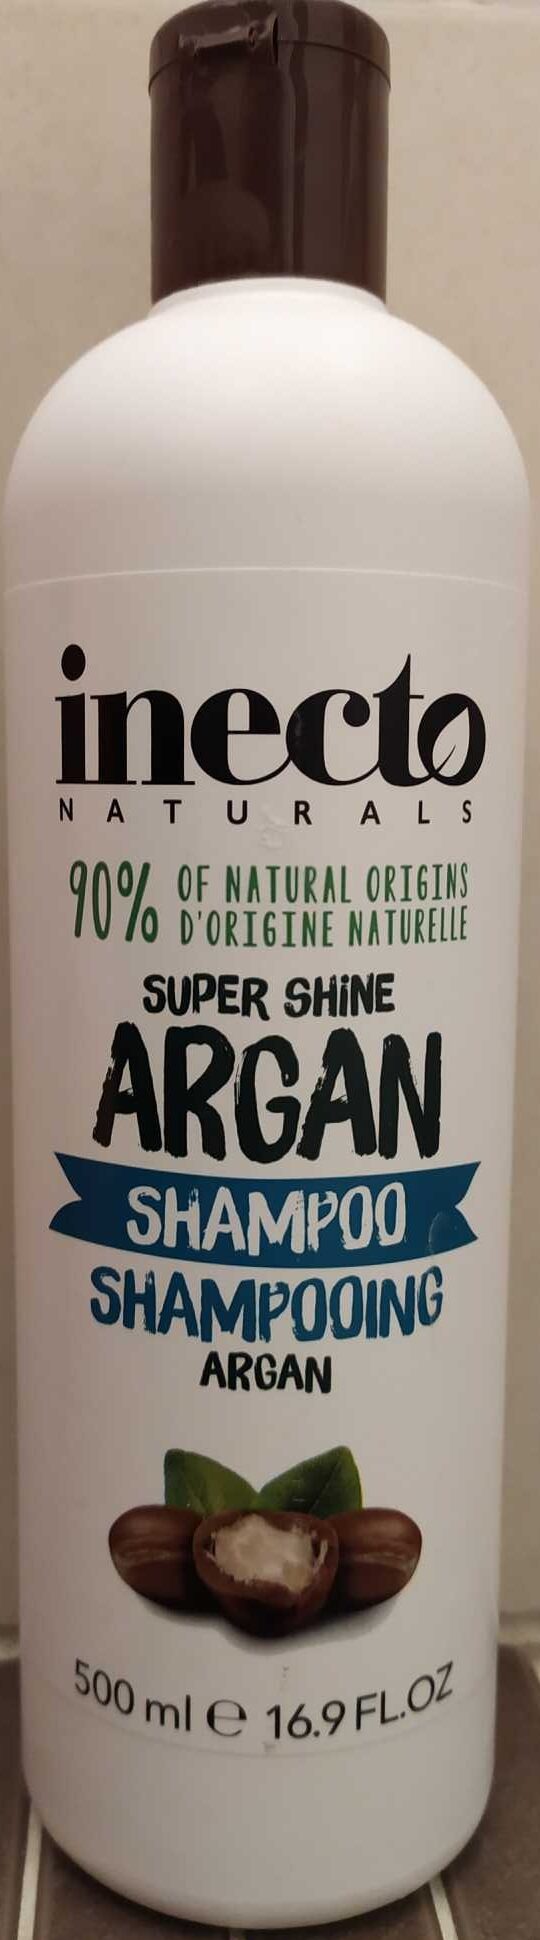 Shampoing ARGAN - Produit - fr